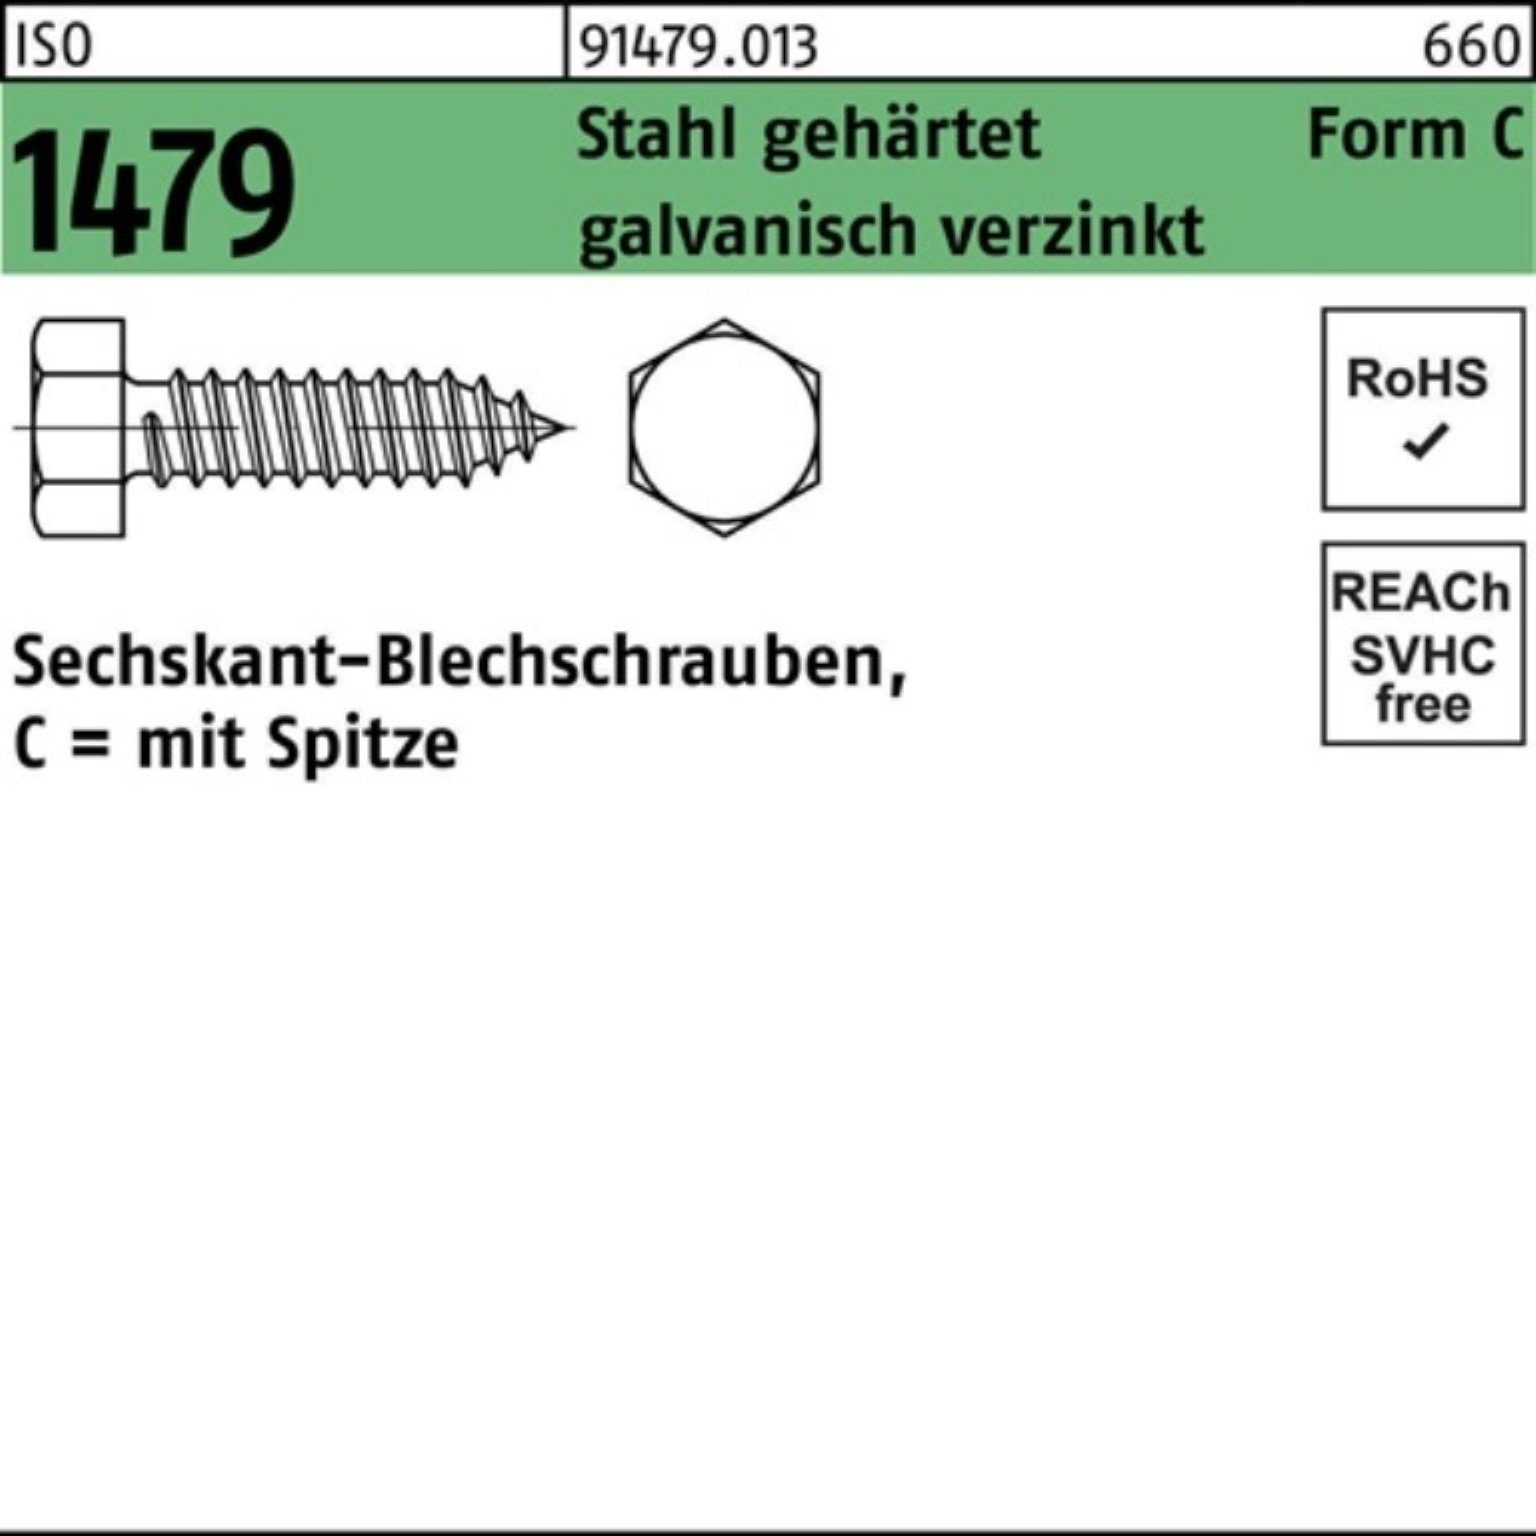 Spitze/6-kt Reyher Stahl Pack gehärtet 4,8x13 ISO 500er Blechschraube Blechschraube C 1479